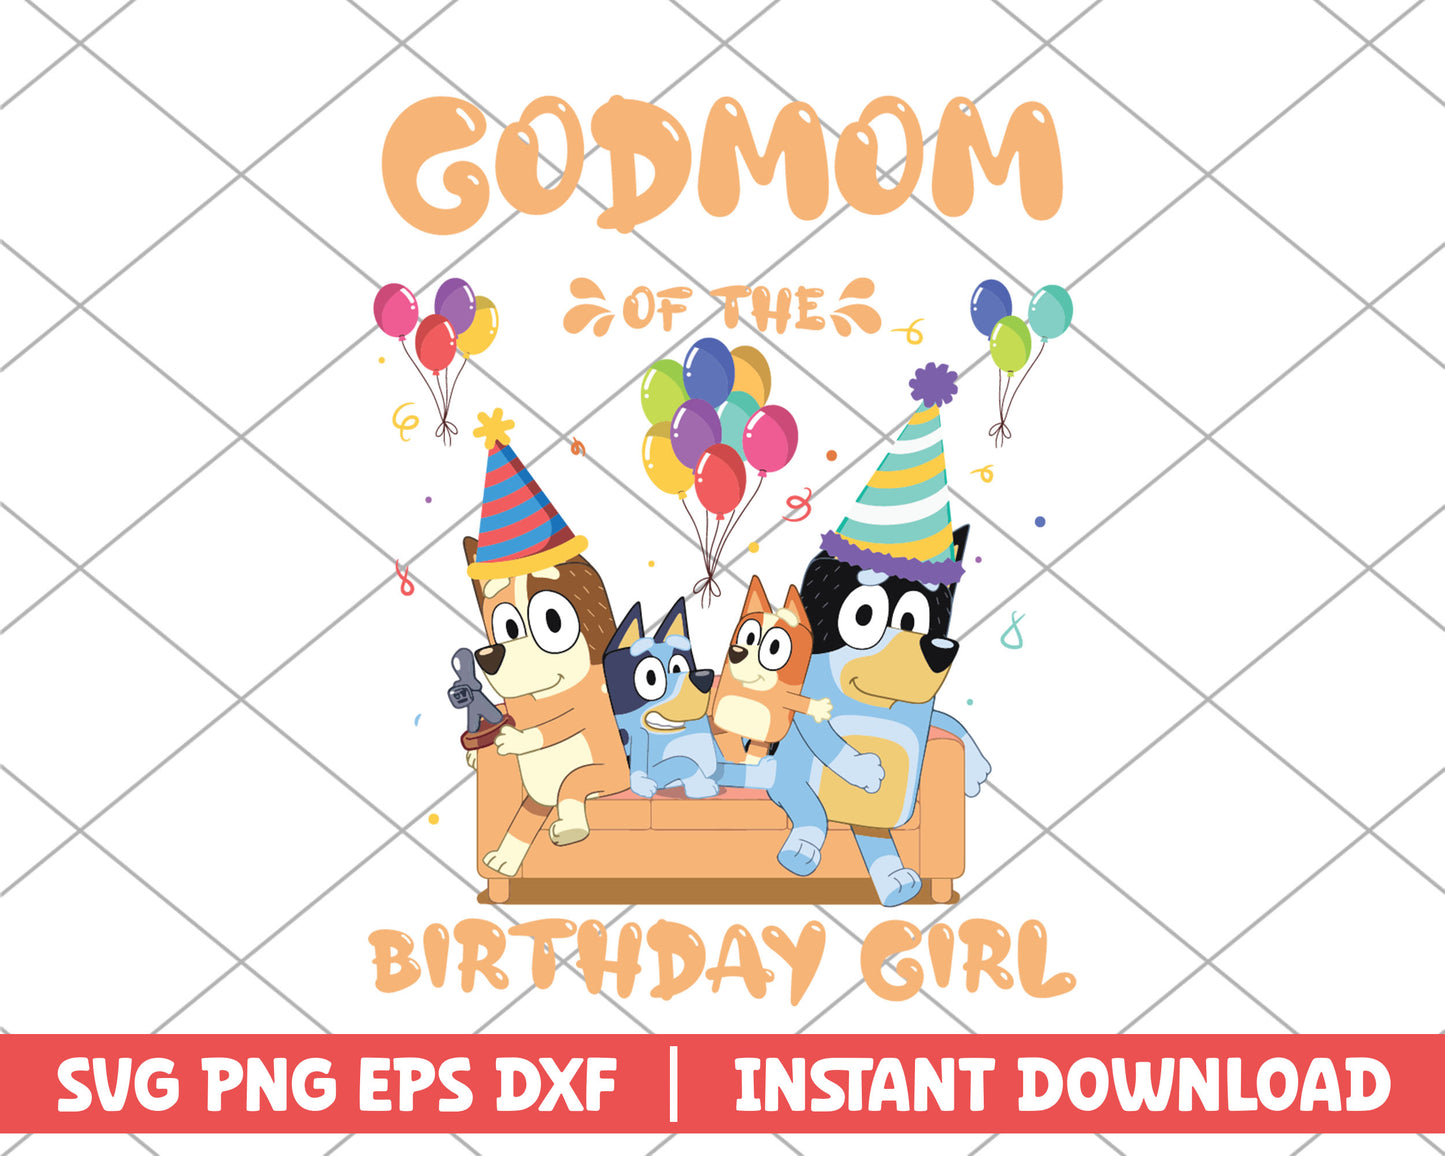 Godmom of the birthday girl cartoon svg 